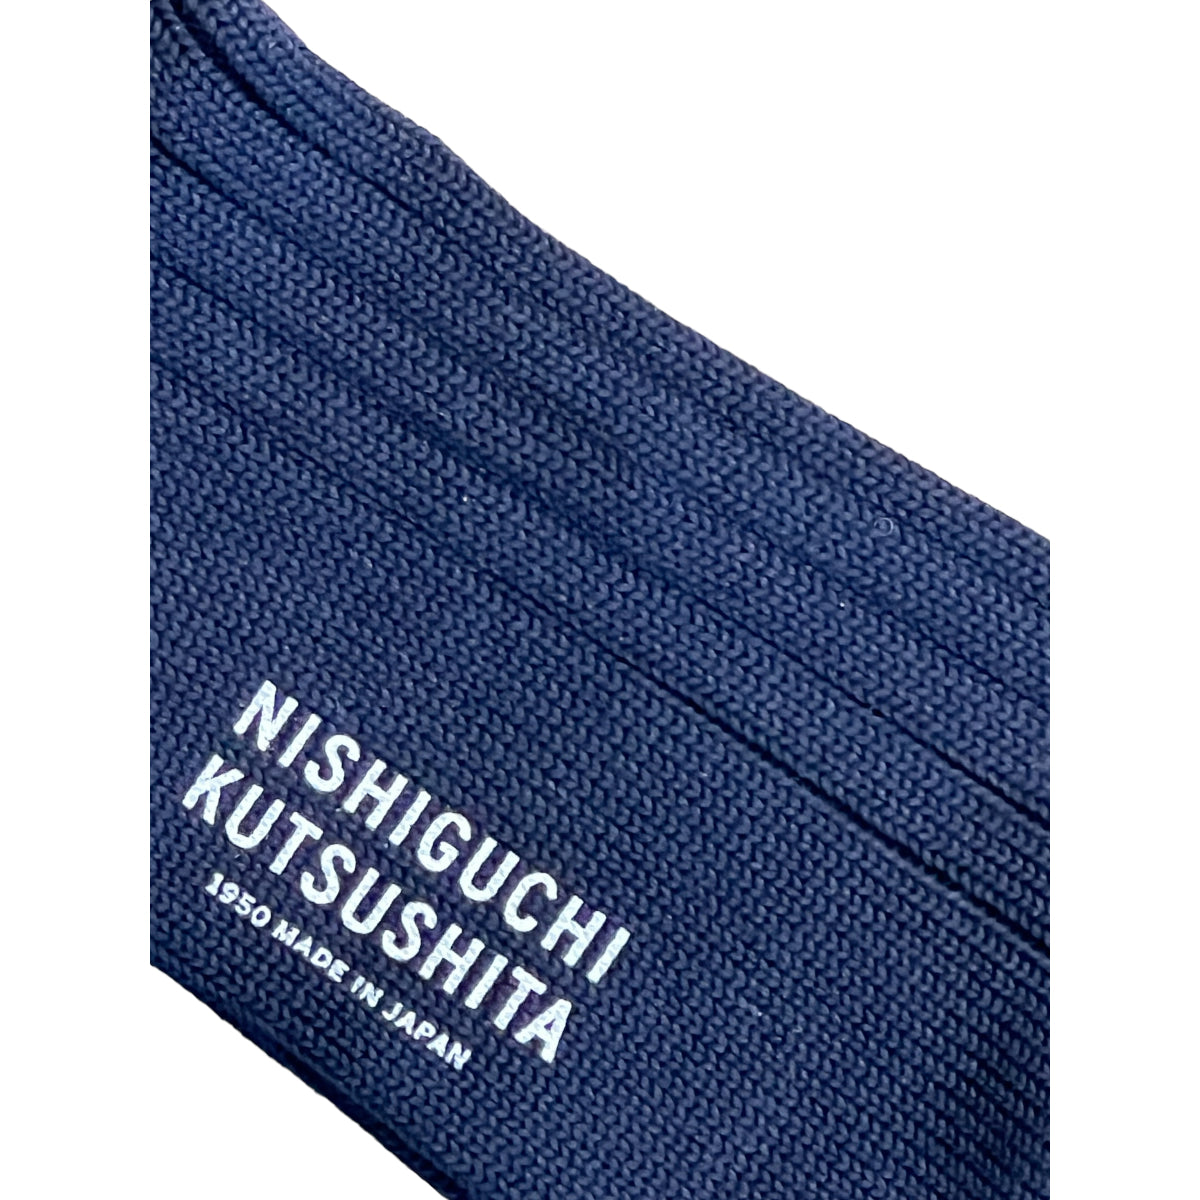 NISHIGUCHI KUTSUSHITA Egyptian Cotton Ribbed Socks navy